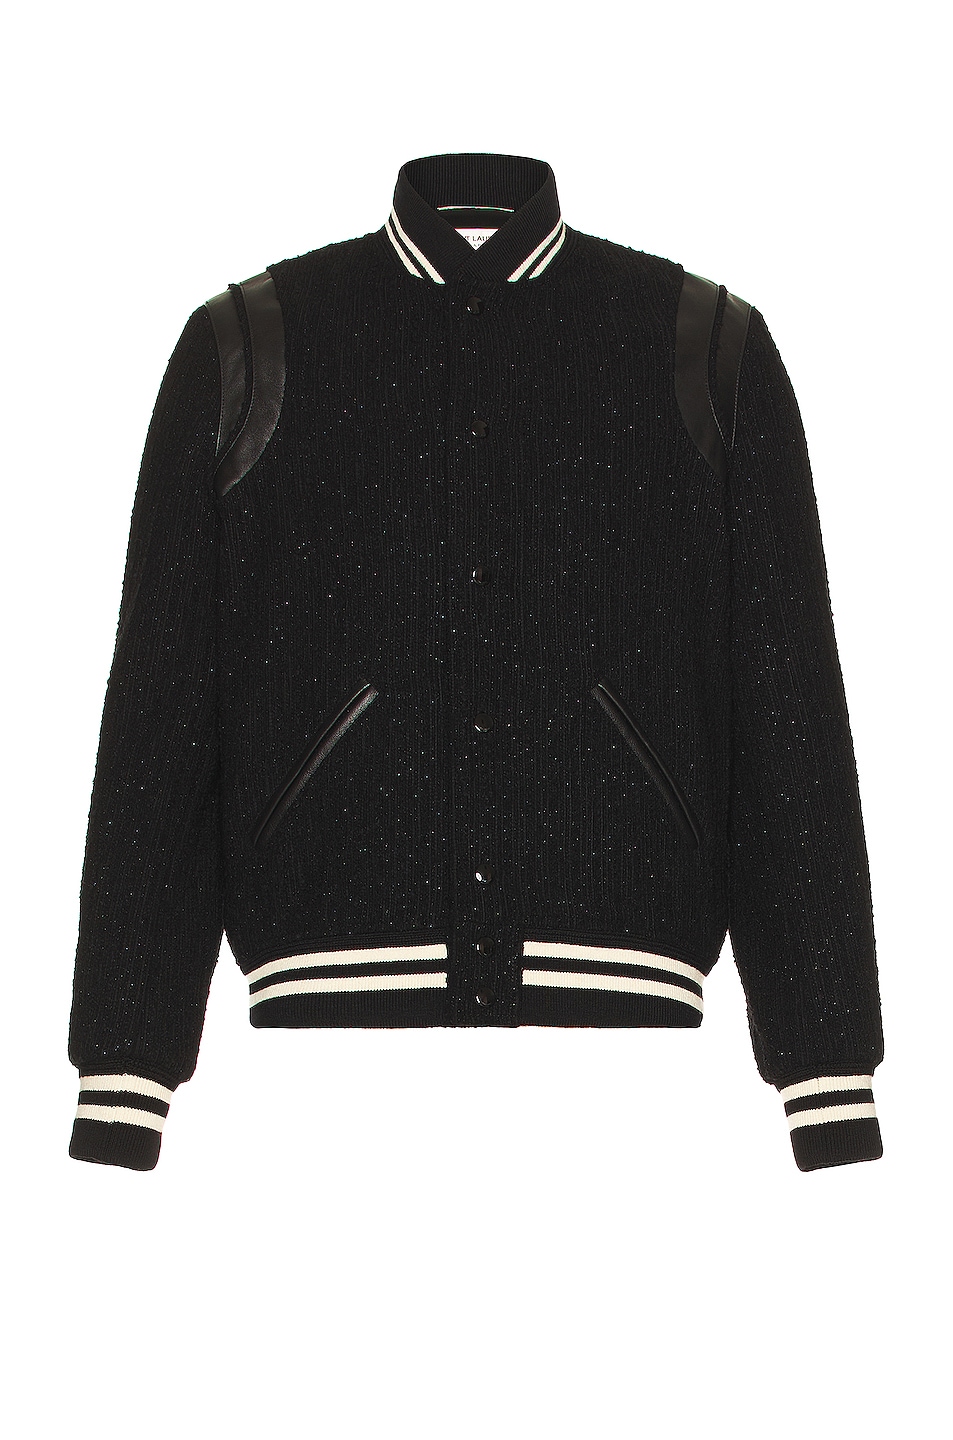 Image 1 of Saint Laurent Lurex Textured Teddy Jacket in Black & White